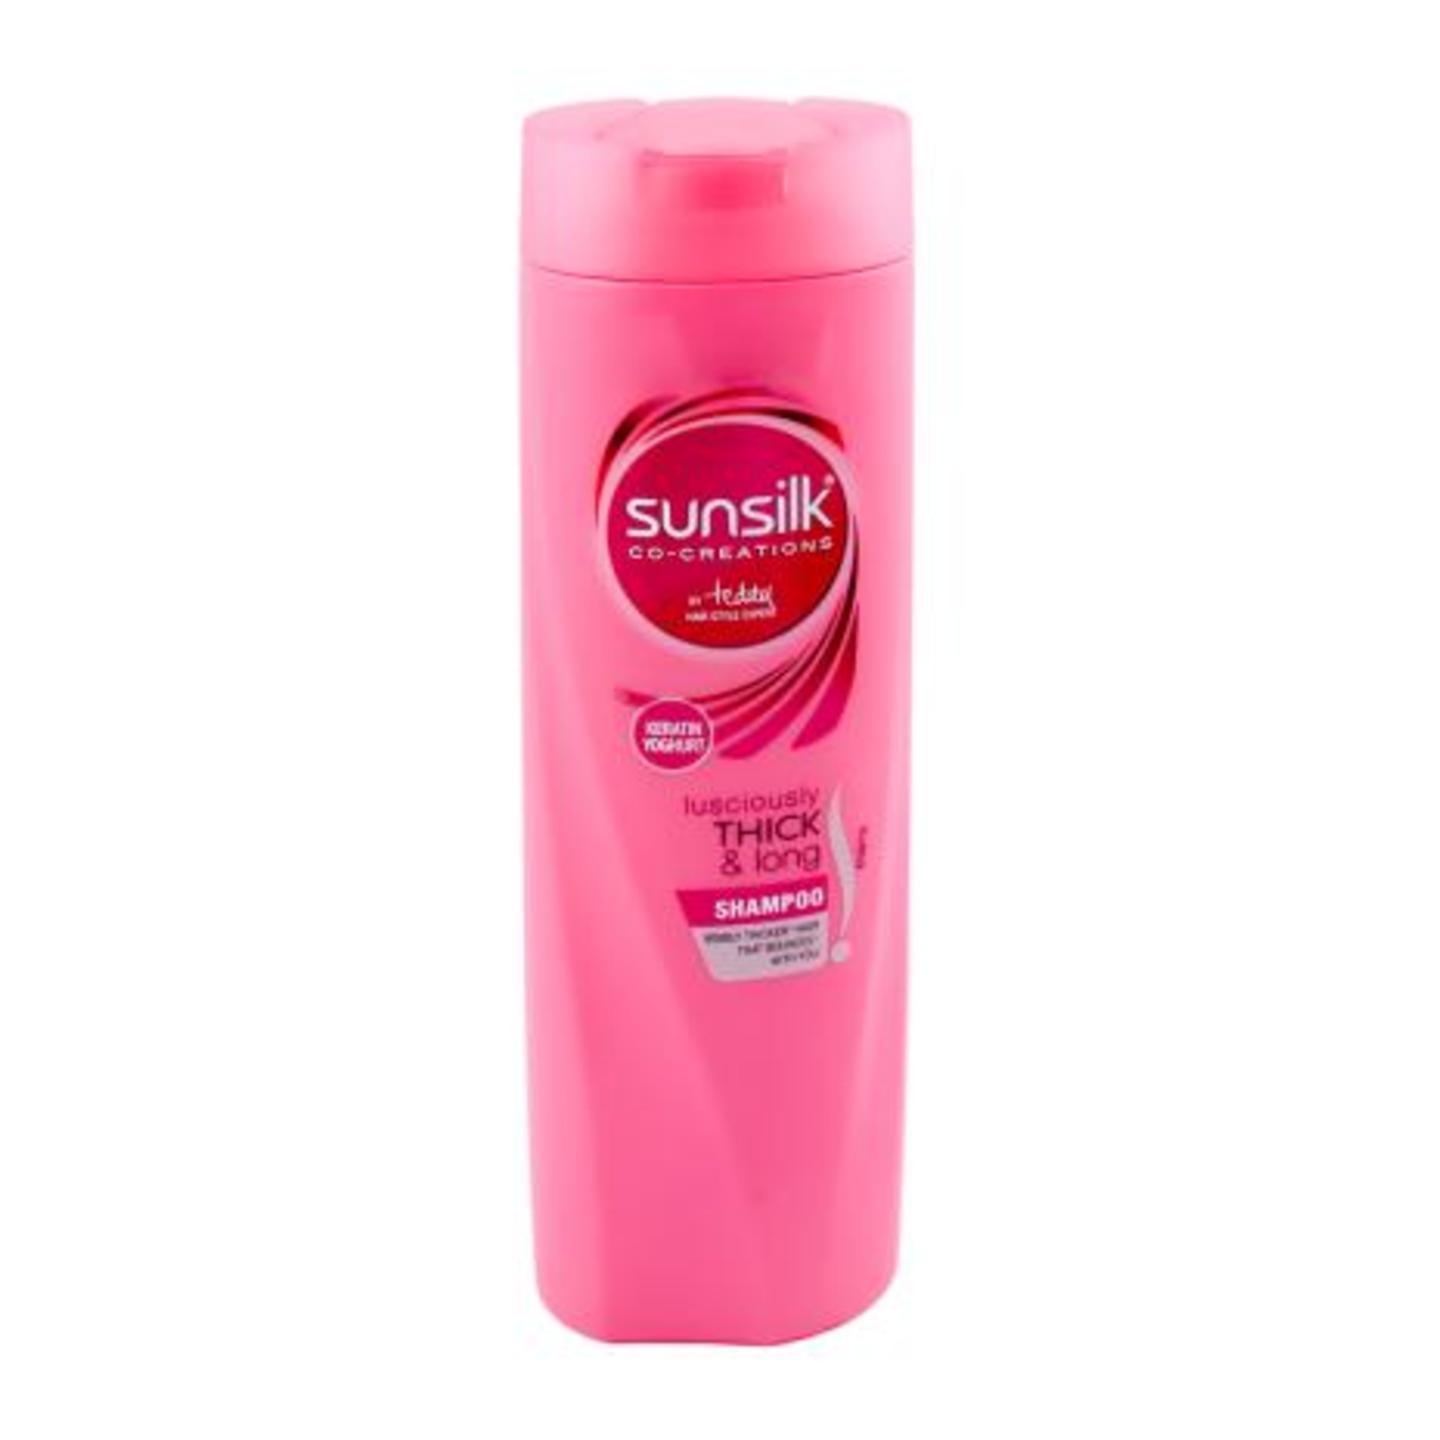 Sunsilk Co-Creations Keratin Yoghurt Lusciously Thick & Long Shampoo 340 ml  PMBM